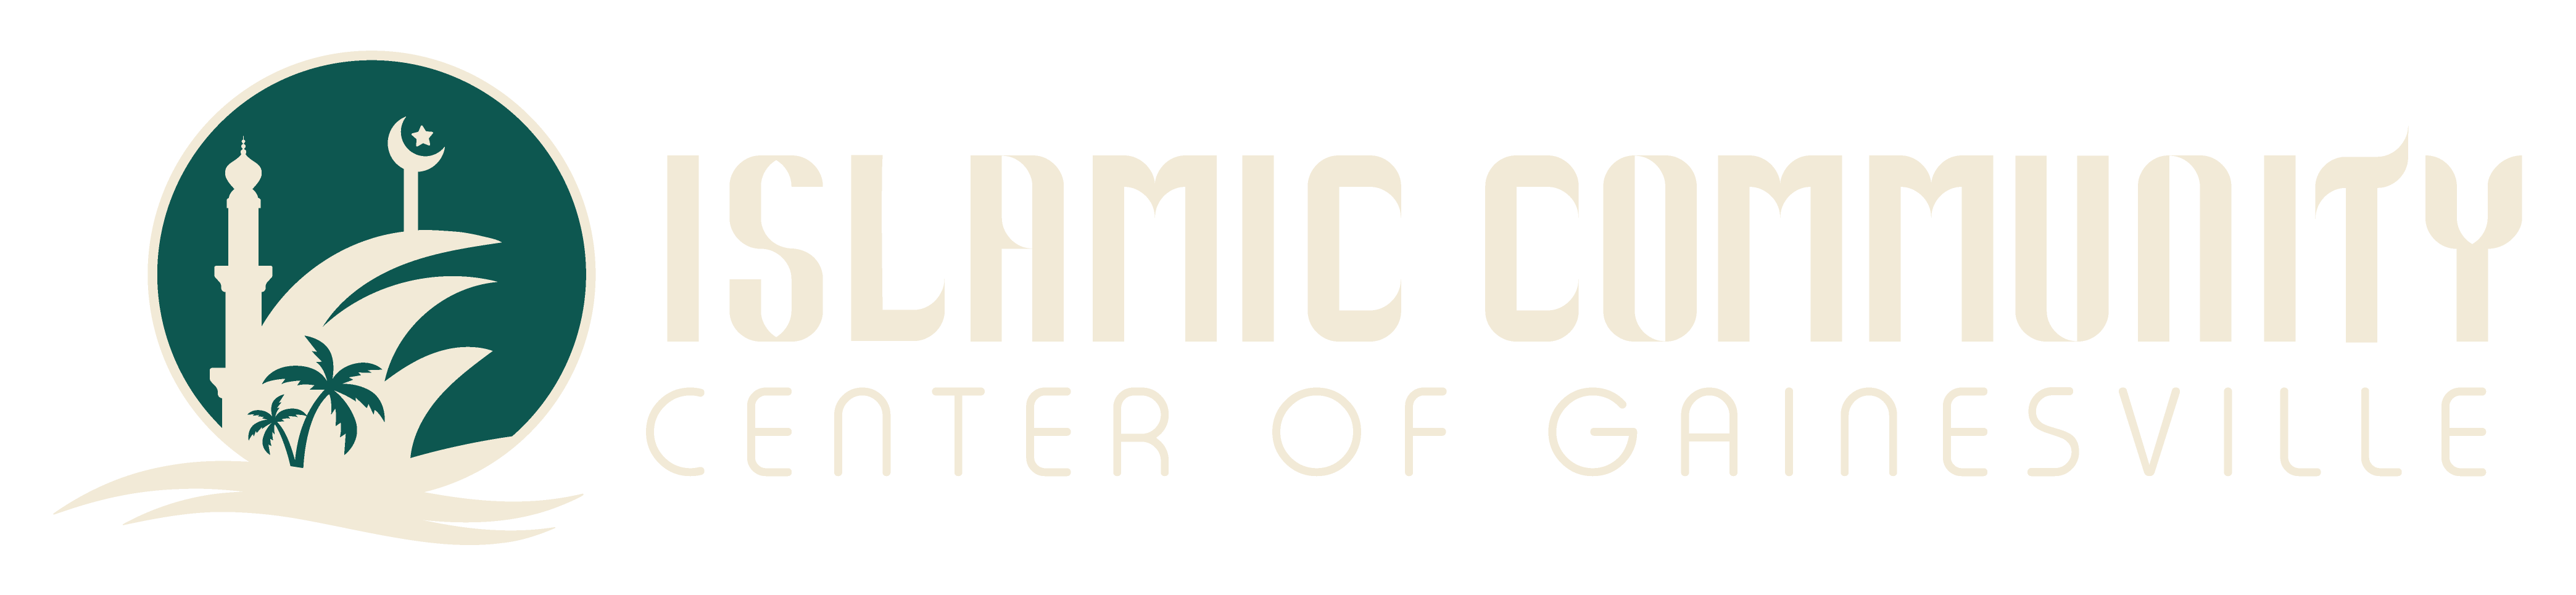 The Islamic Community Center of Gainesville logo